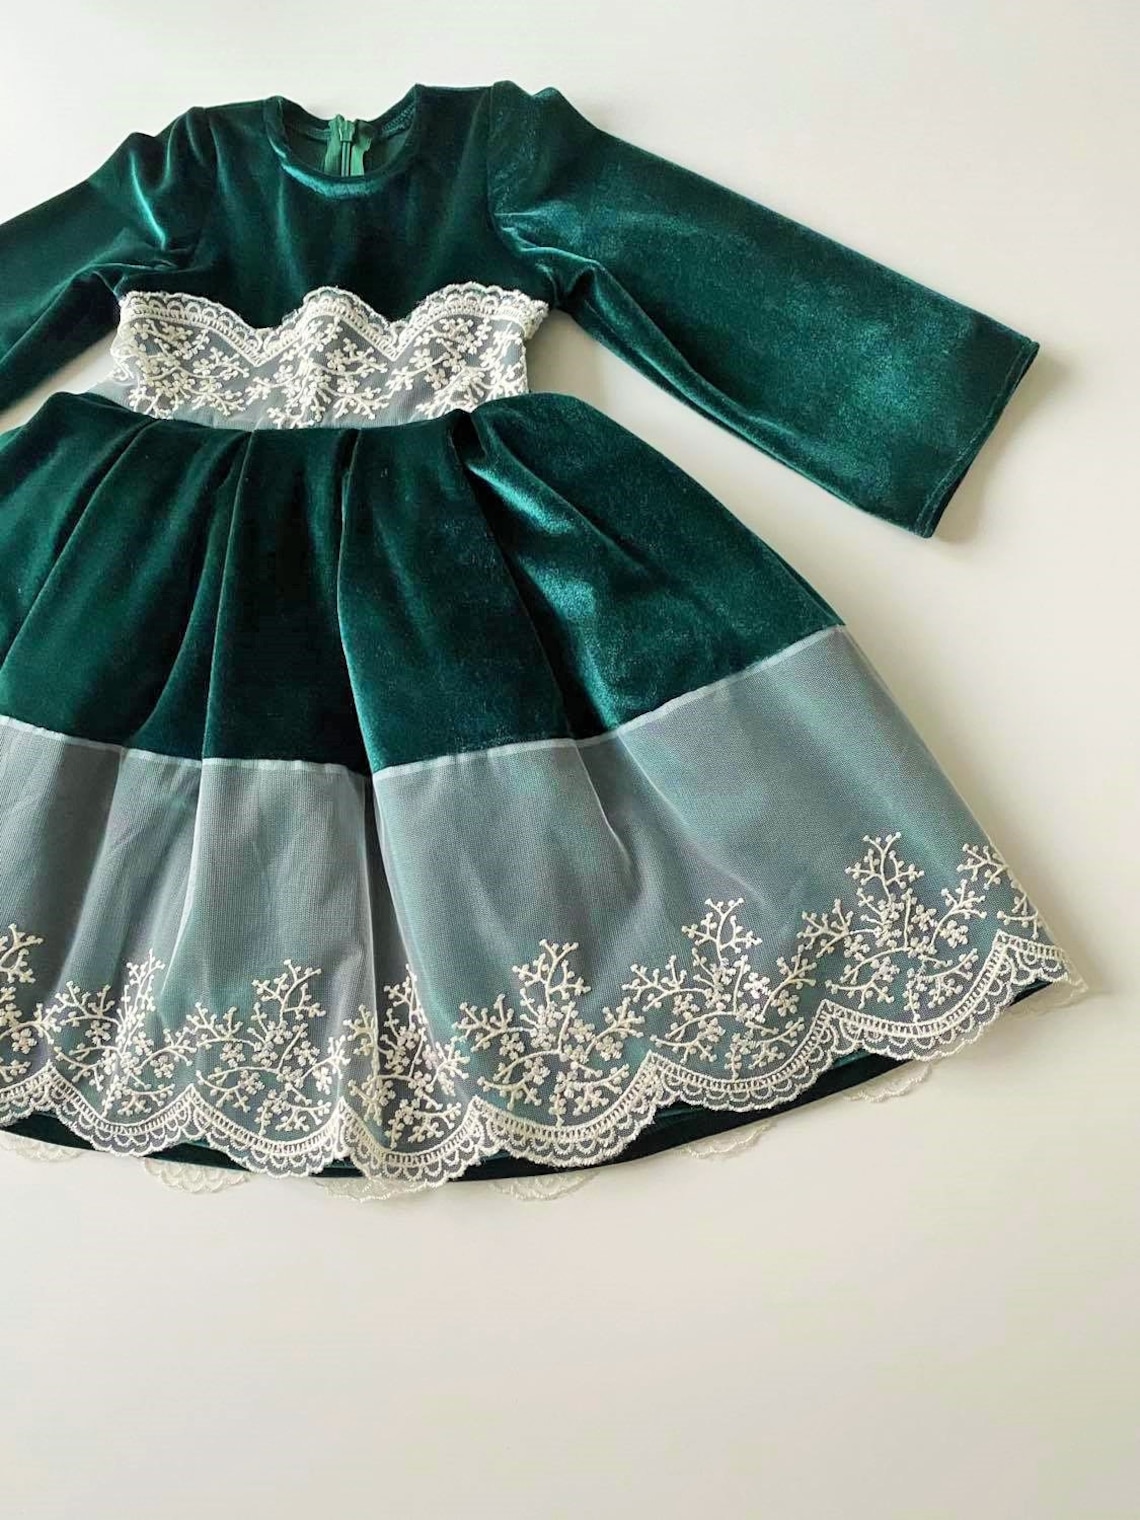 Junior bridesmaid dress emerald green-baby girl birthday dress | Etsy